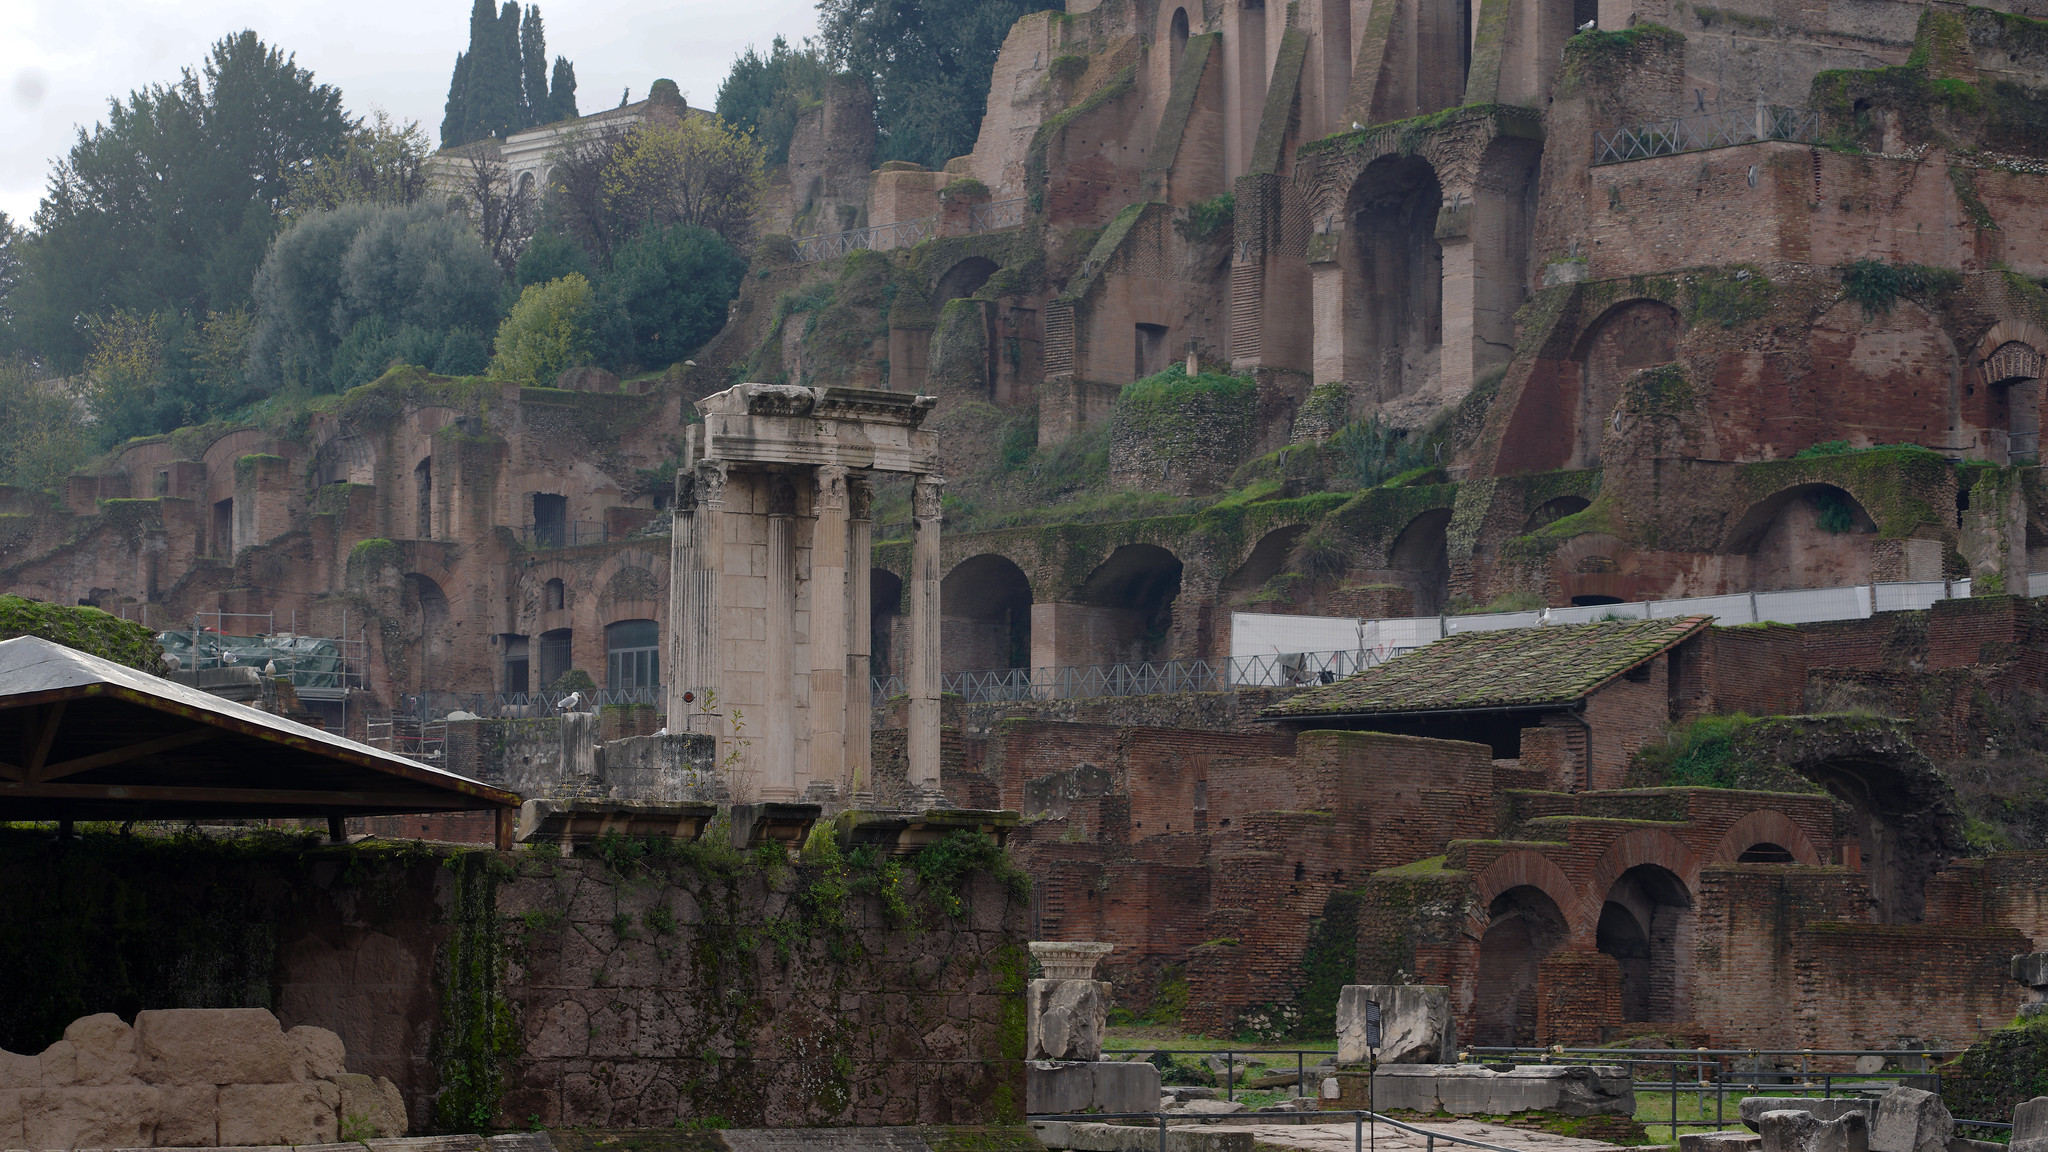 A Renaissance scholar helps build virtual Rome